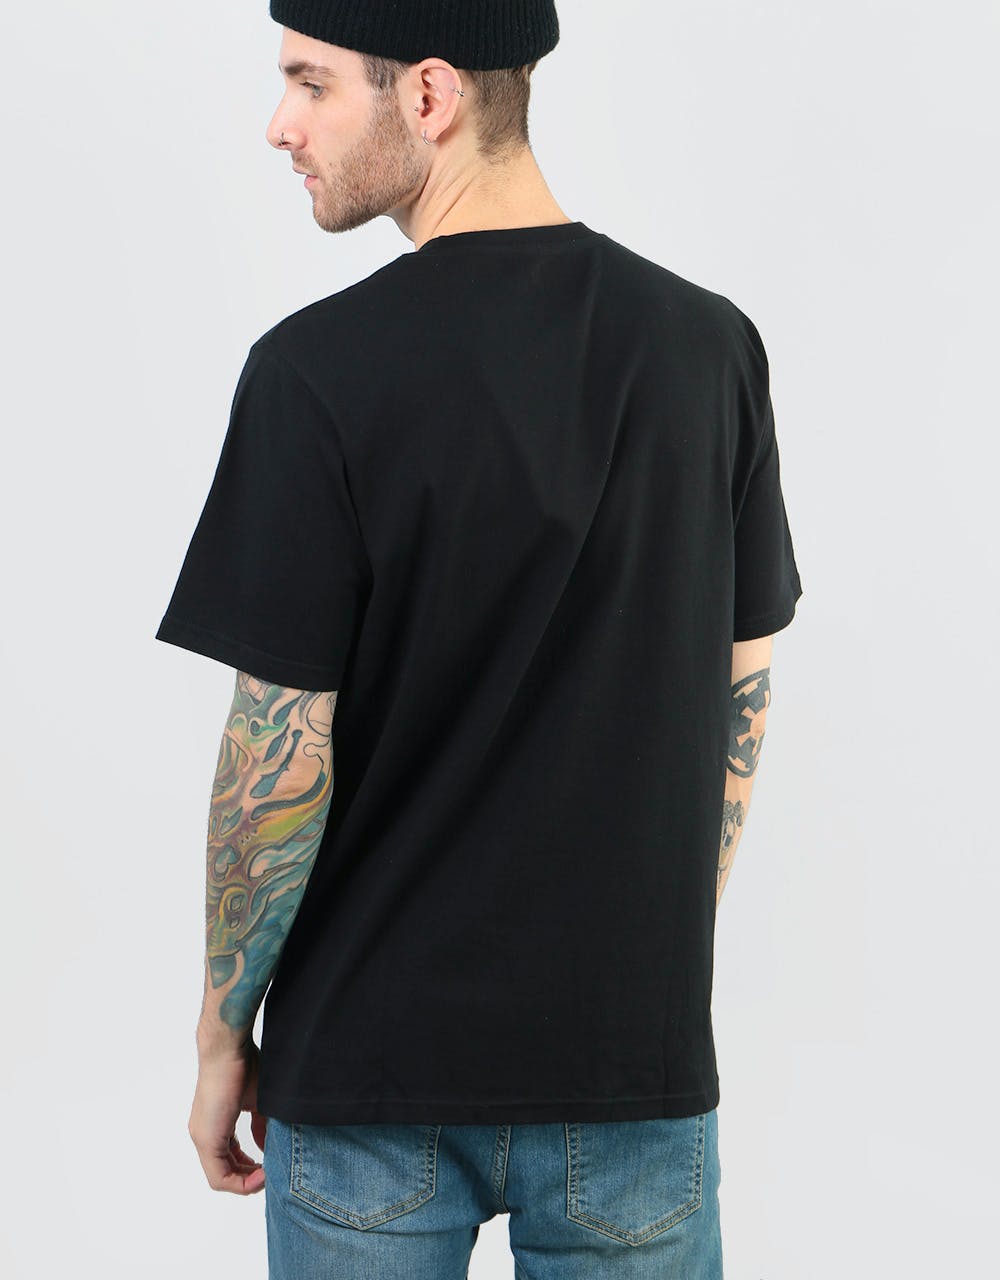 Dickies Horseshoe T-Shirt - Black